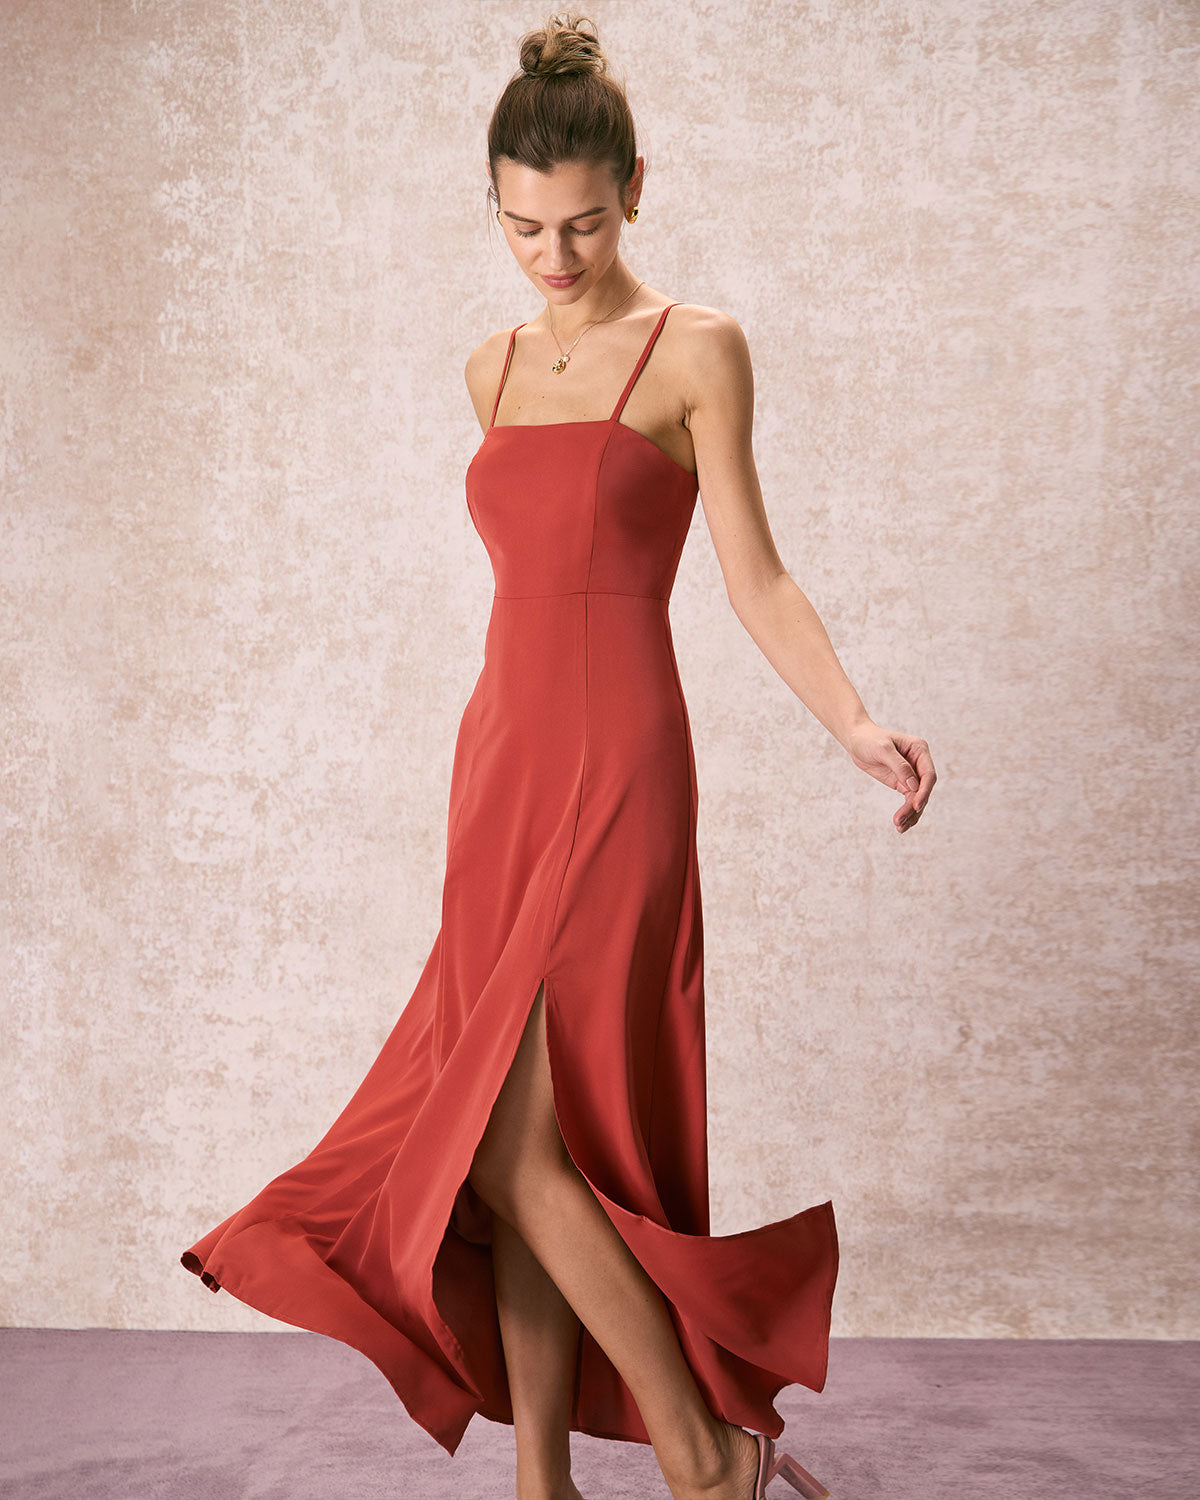 Plain Satin Long Red Pockets Party Dress Sleeveless With Sweetheart Neck -  $132.587 #TZ1384 - SheProm.com